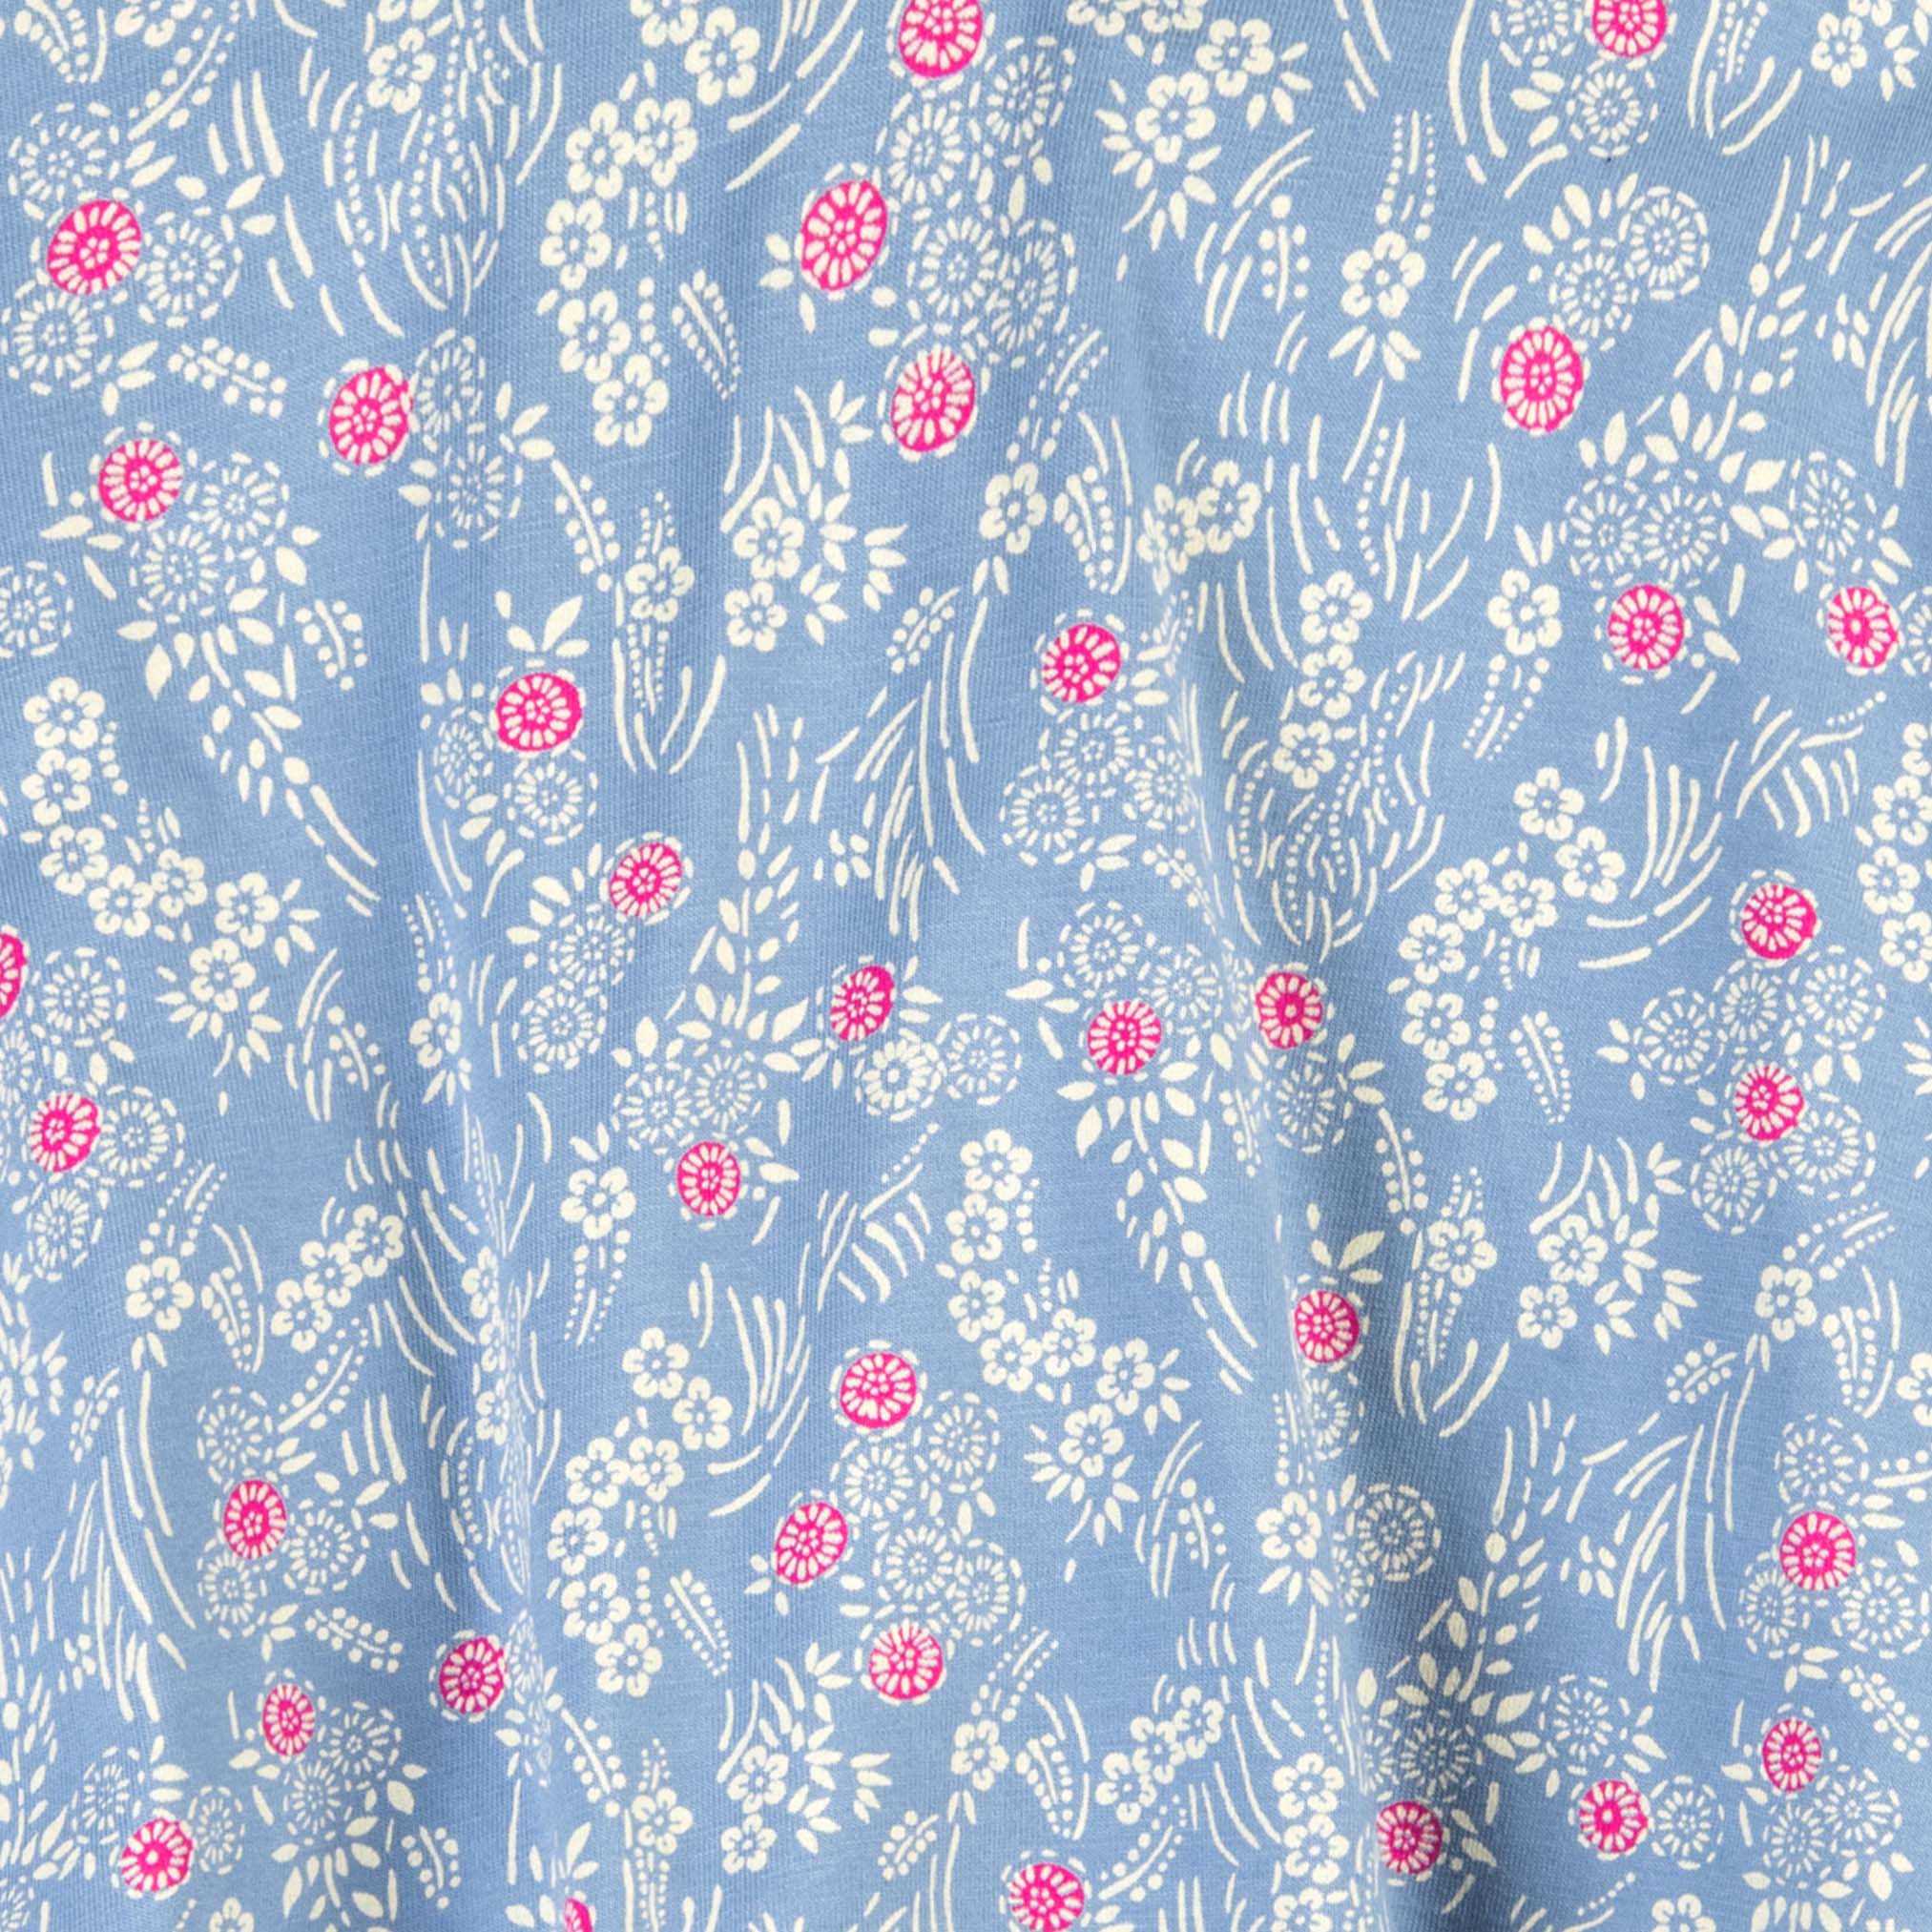 Kids Organic Cotton Sleeveless Twirl Dress: Cherry Blossom